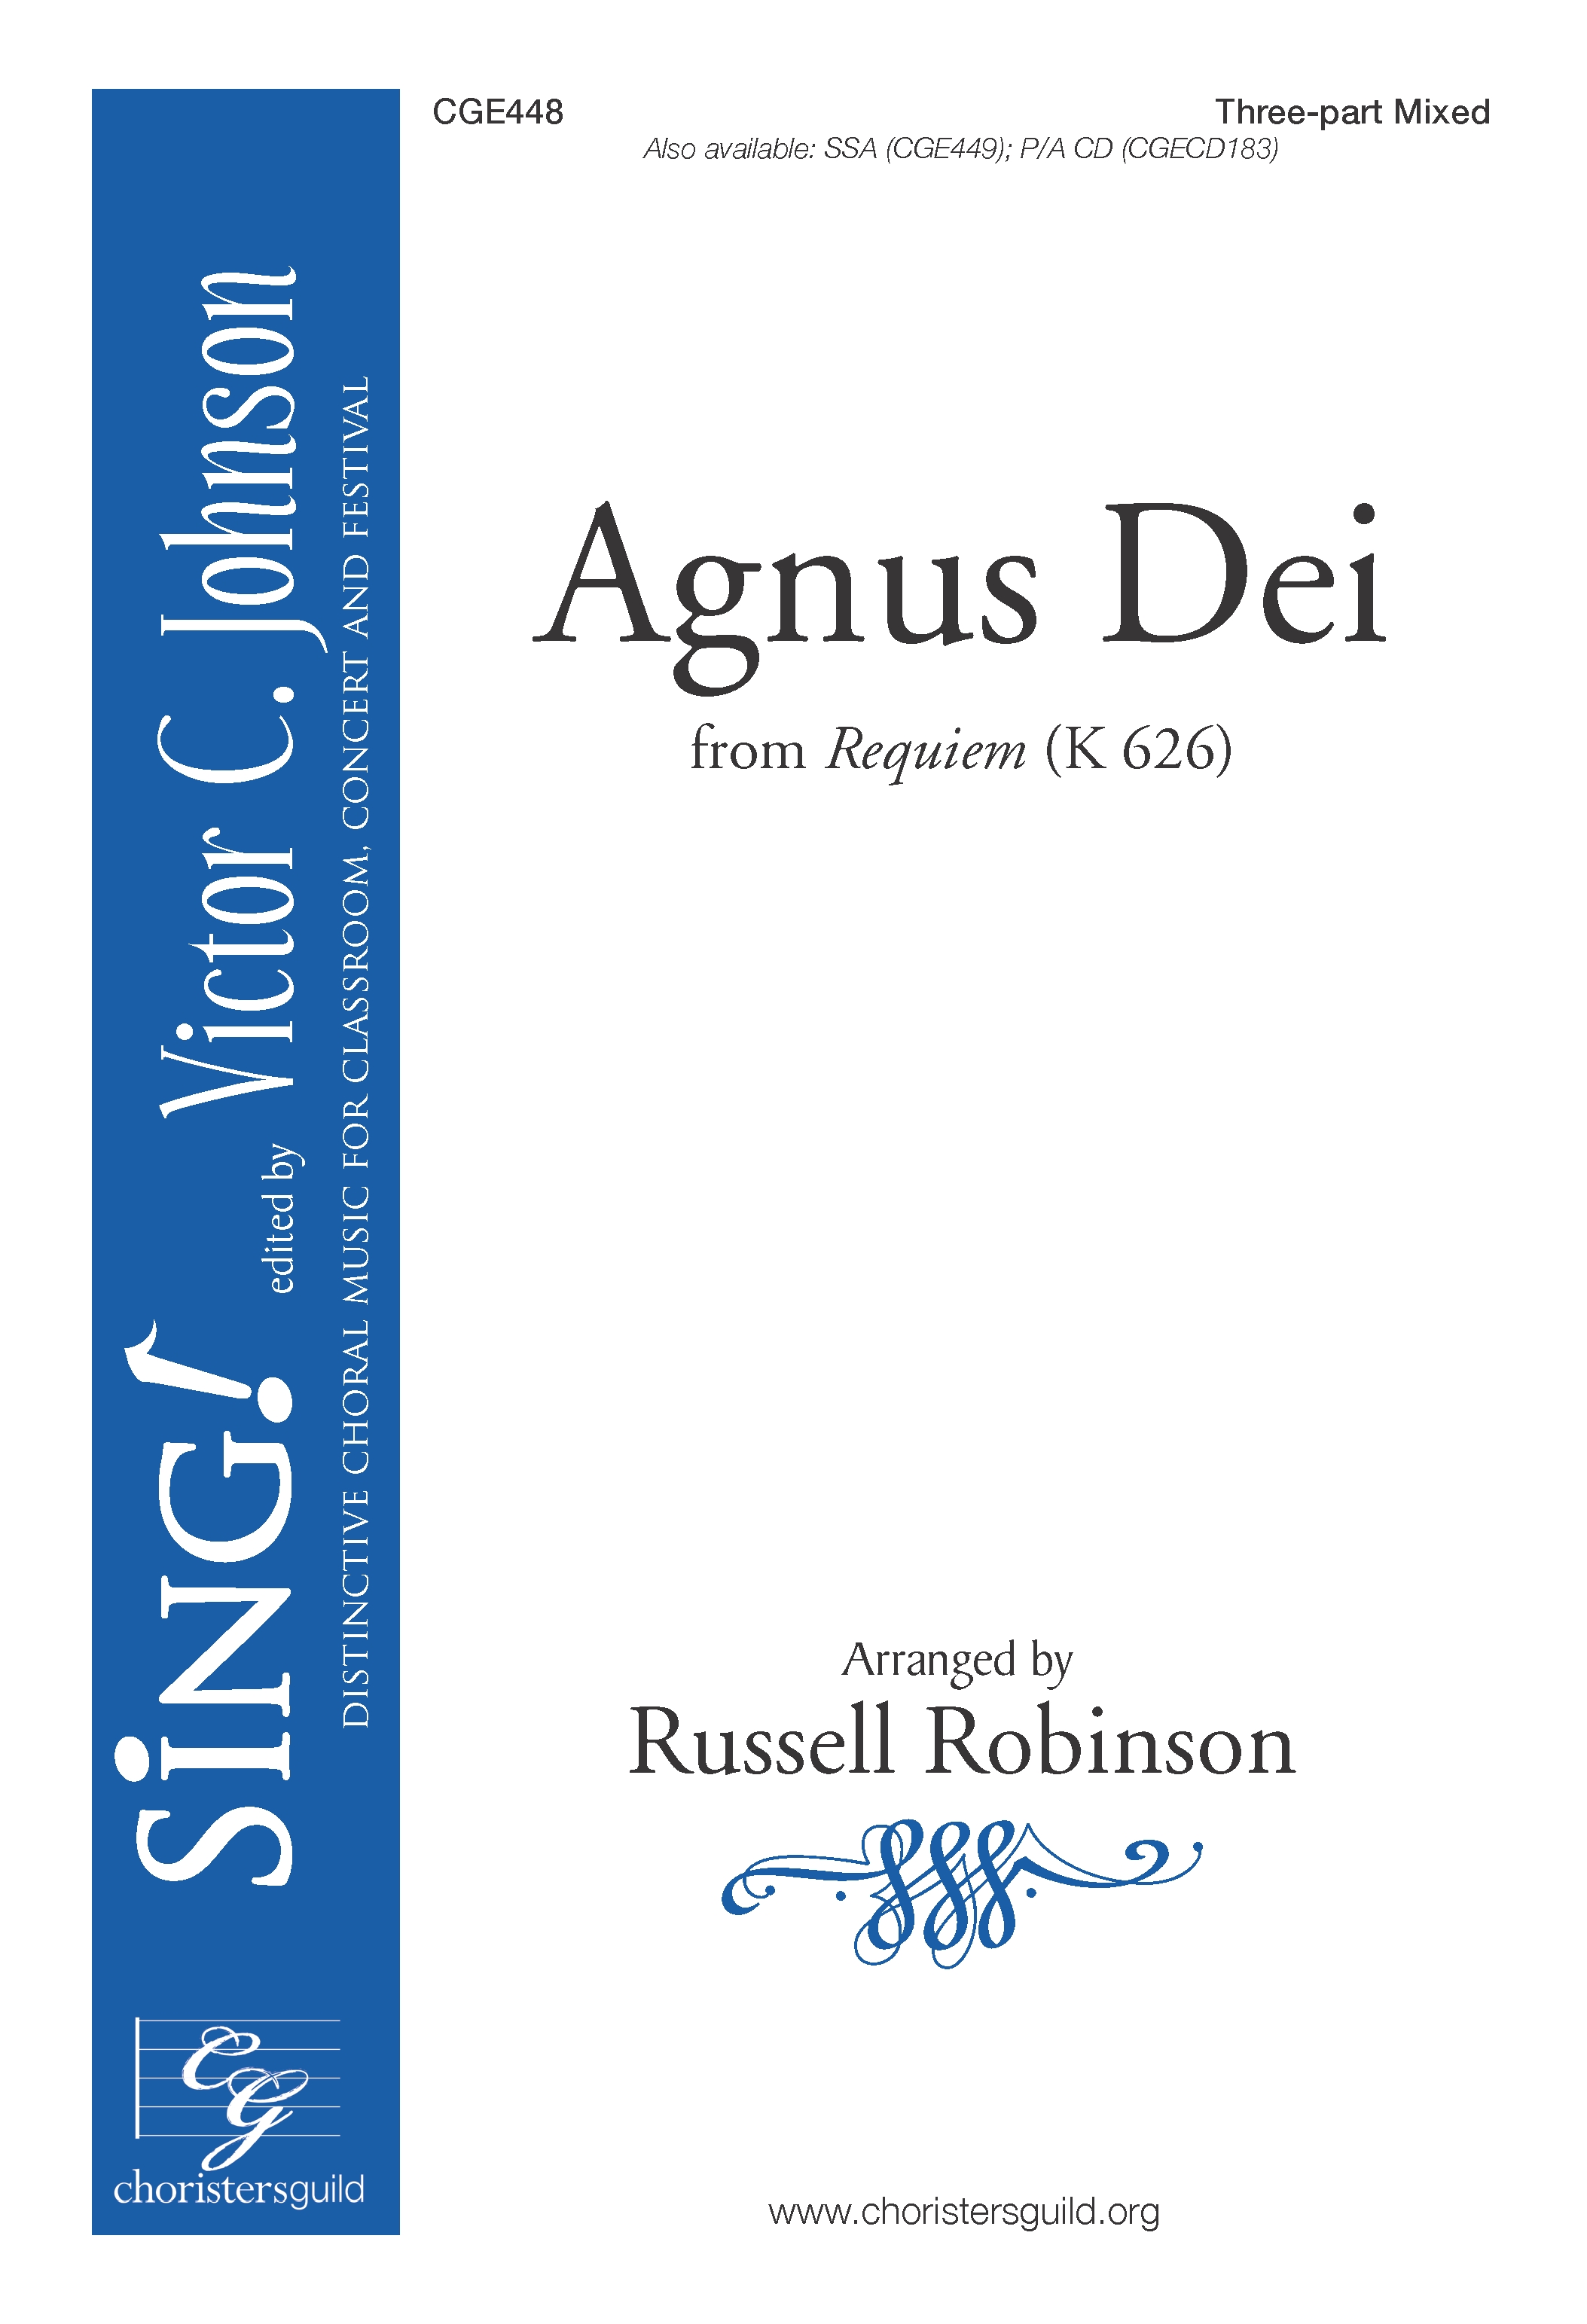 Agnus Dei (from Requiem K 626) - Three-part Mixed